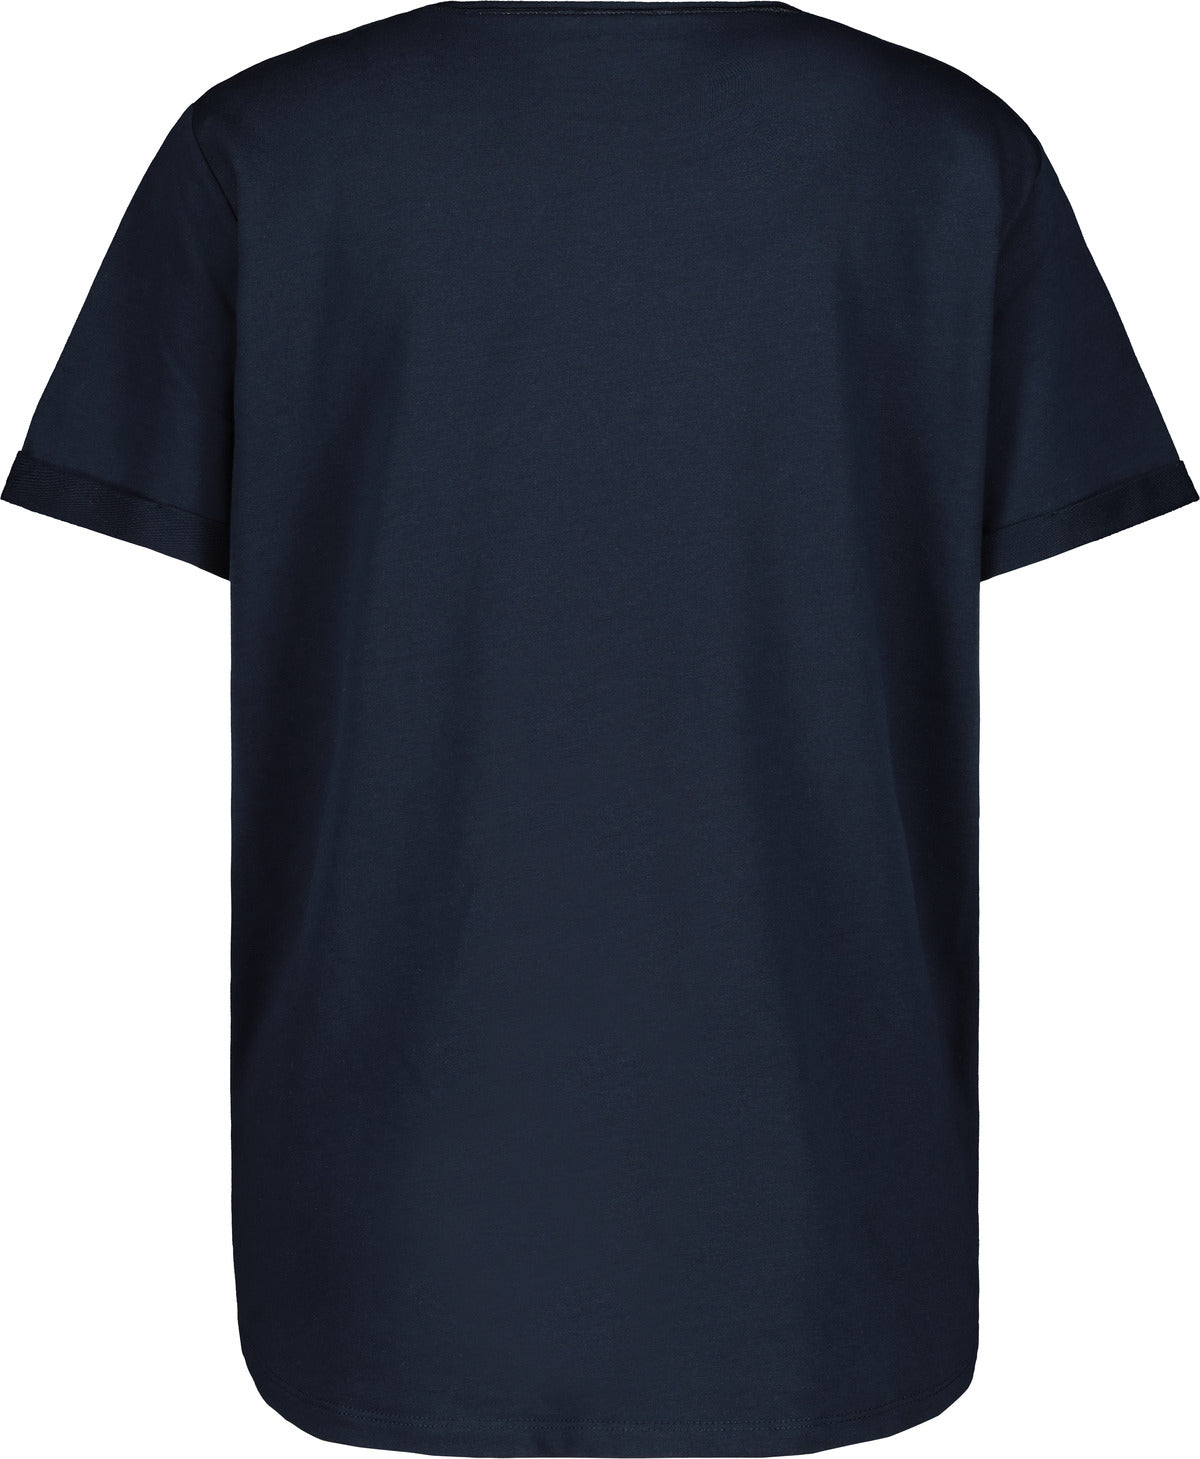 Monari Damen Statement T-Shirt `DRESS COOL......